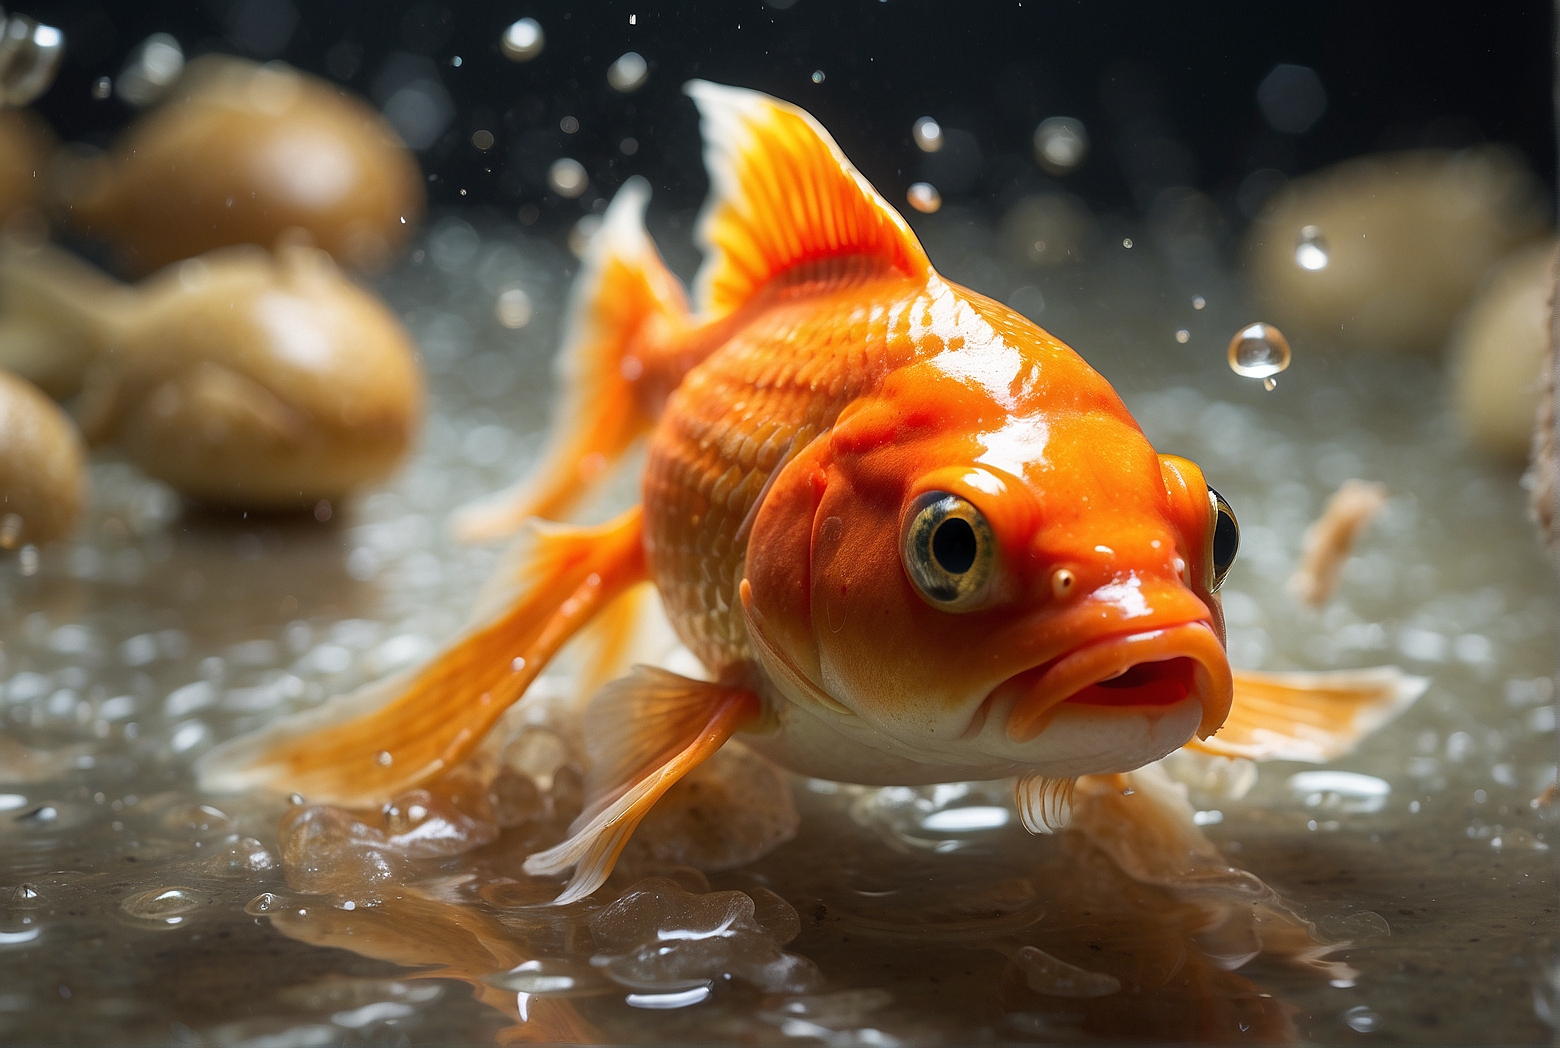 Can goldfish eat bread?